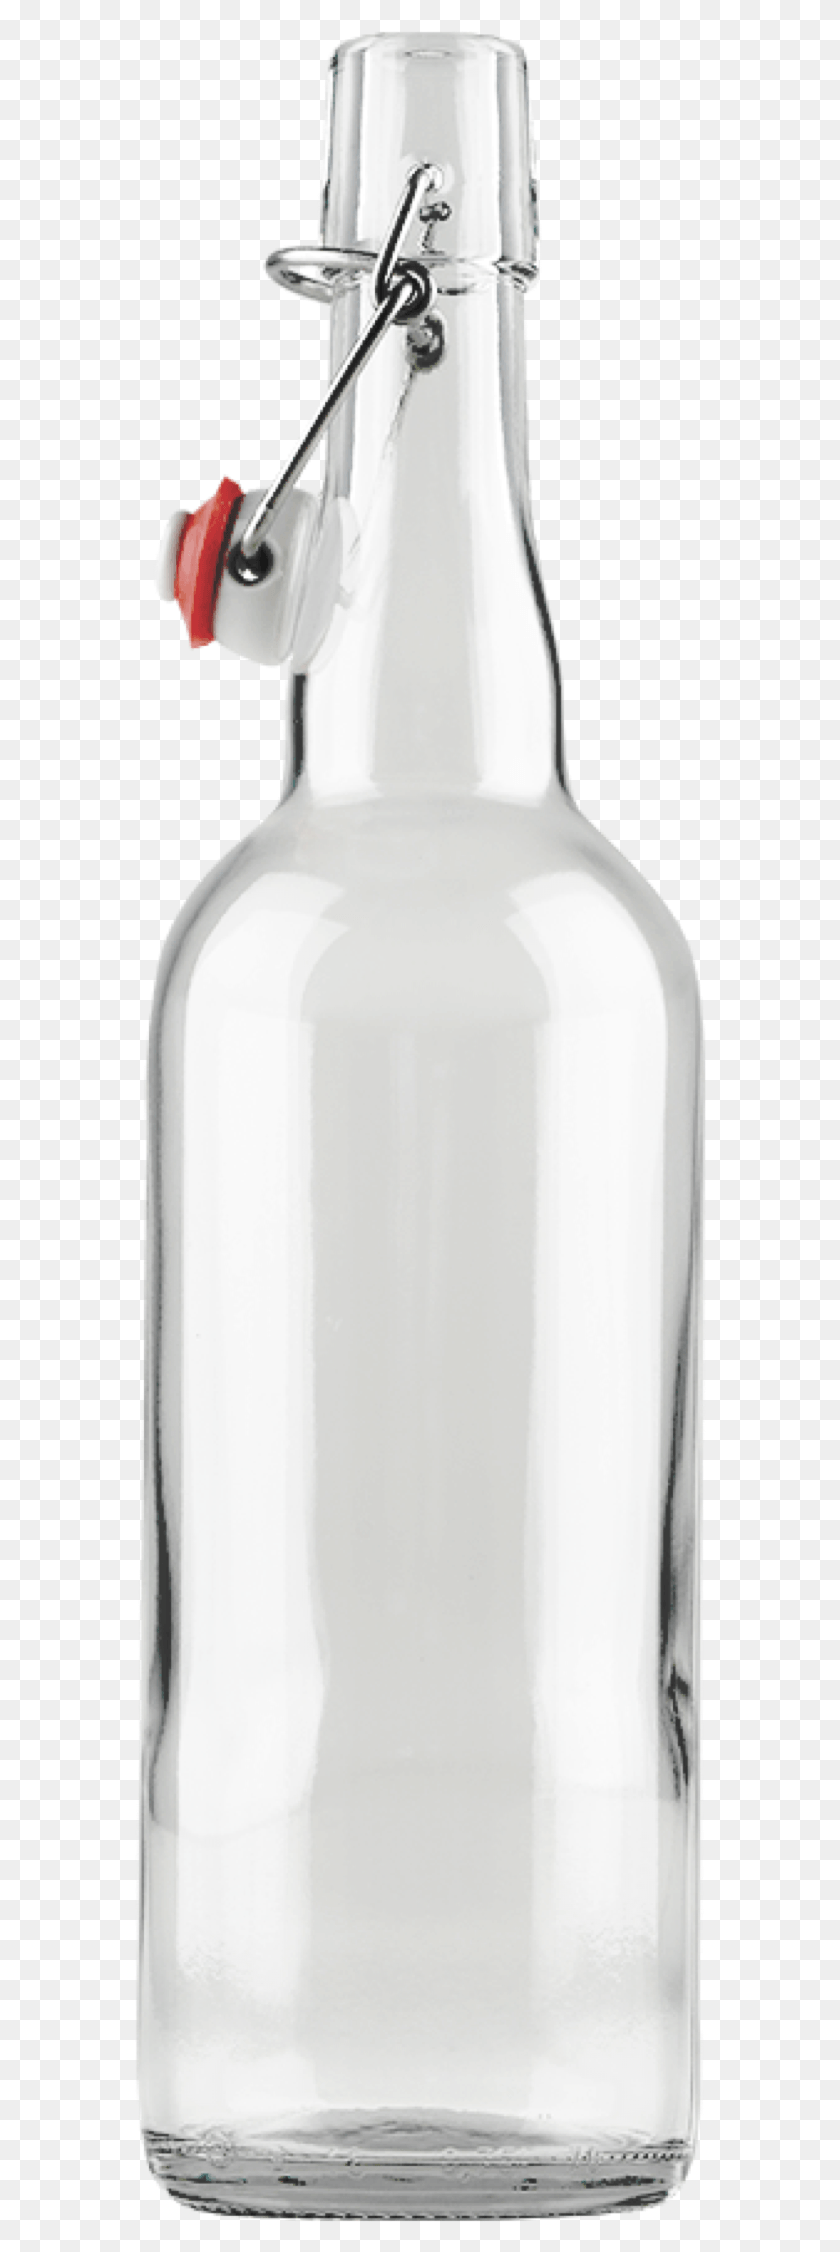 572x2192 Descargar Pngml Swing Top Botellas Transparentes Botella De Vidrio, Jar, Leche, Bebidas Hd Png